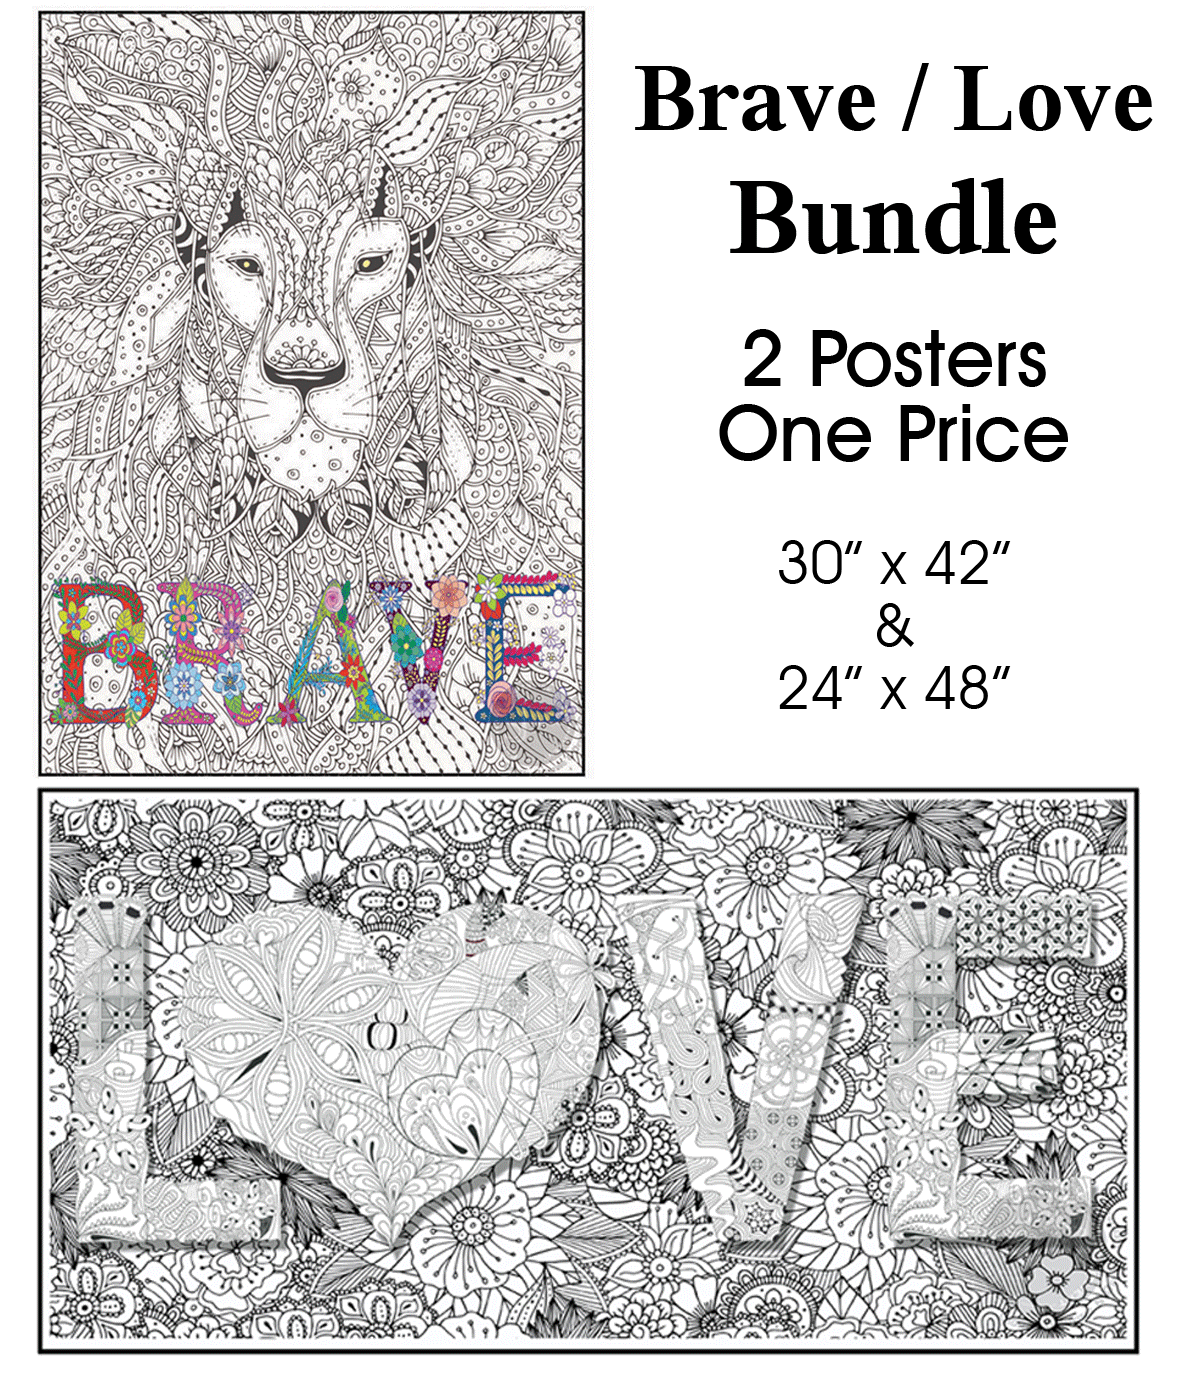 BRAVE / LOVE - Bundle of 2 Posters for $50 - SJPrinter 